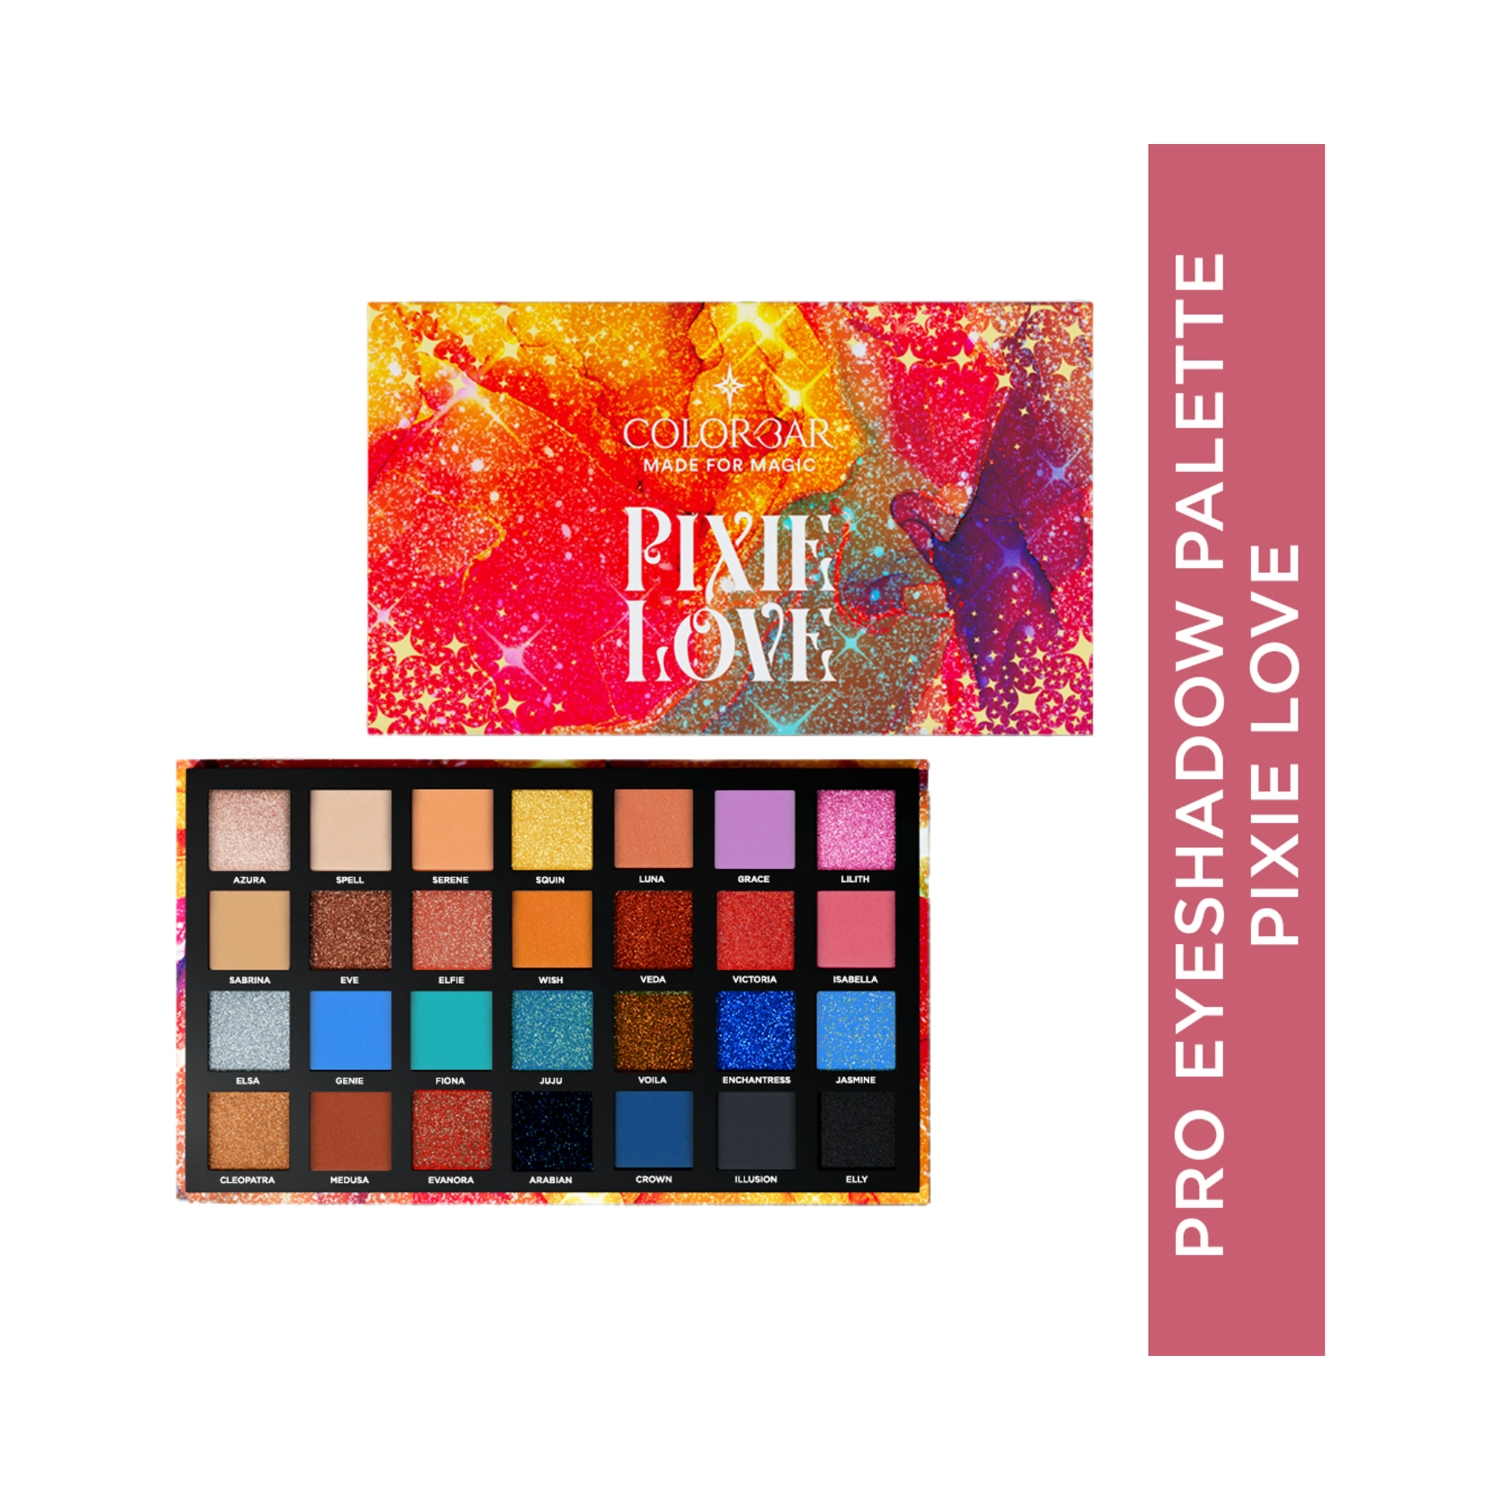 Colorbar | Colorbar Pixie Love Eyeshadow Palette - Multi-Color (30g)